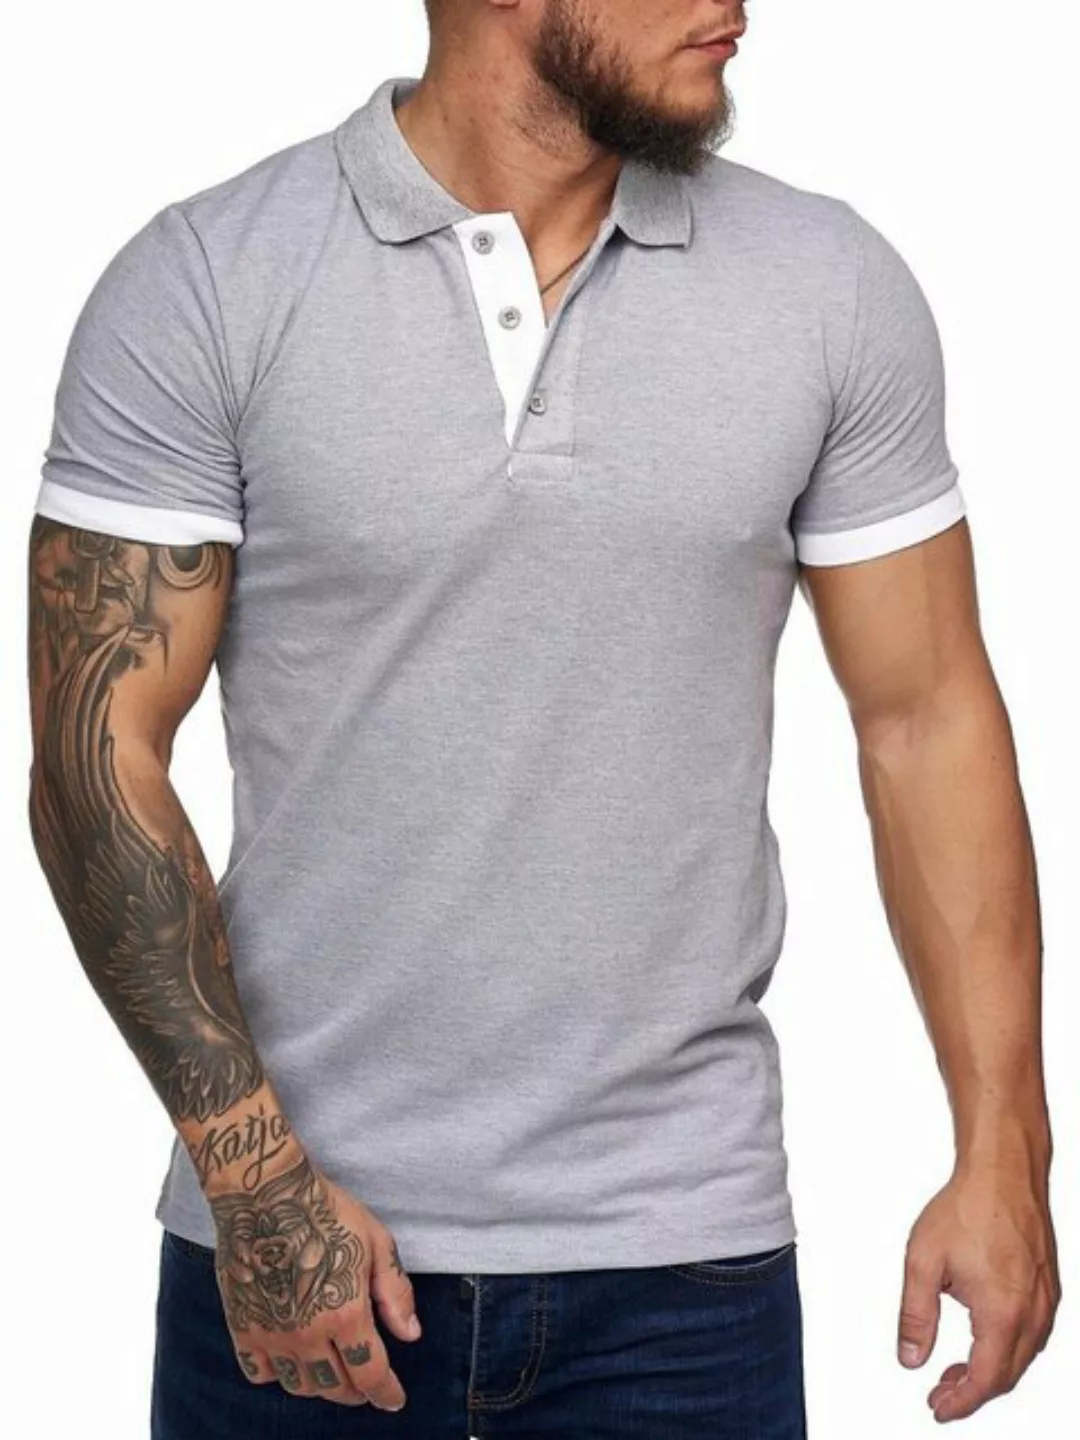 John Kayna T-Shirt Herren T-Shirt Poloshirt Shirt Kurzarm Printshirt Polo K günstig online kaufen